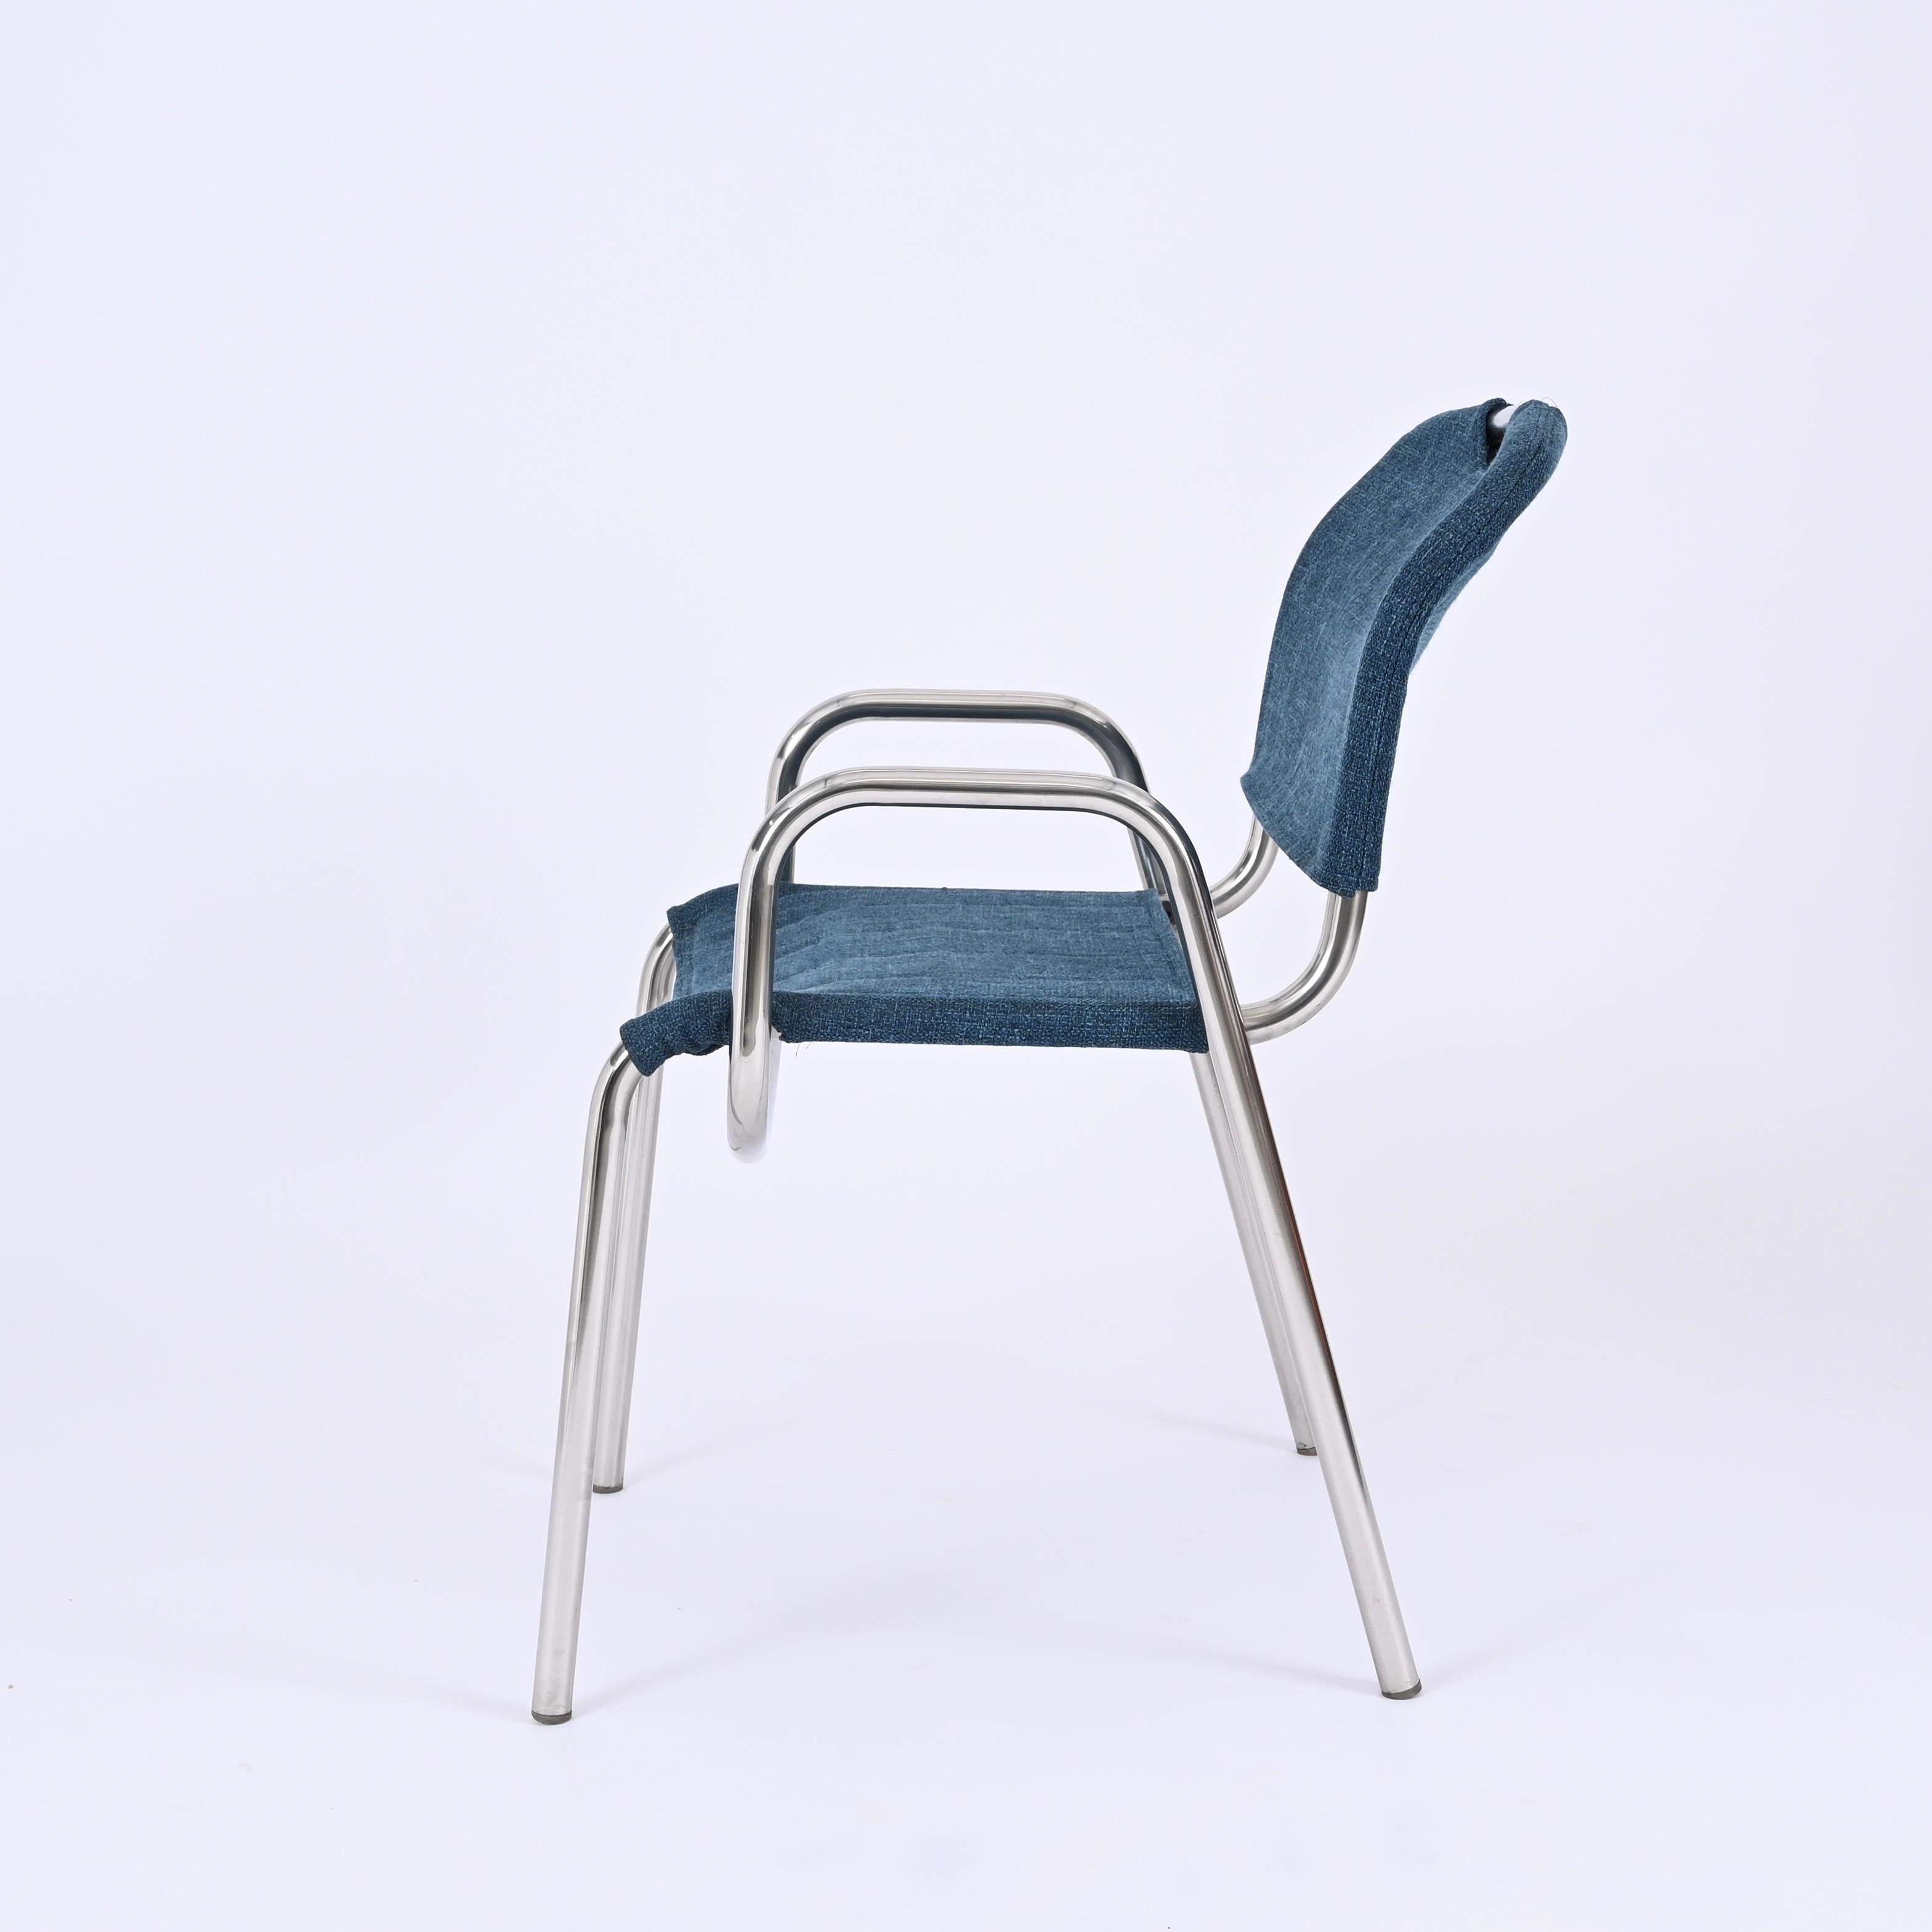 Pair of Blue Castiglietta Dining Chairs by Castiglioni for Zanotta, Italy 1960s In Good Condition For Sale In Roma, IT